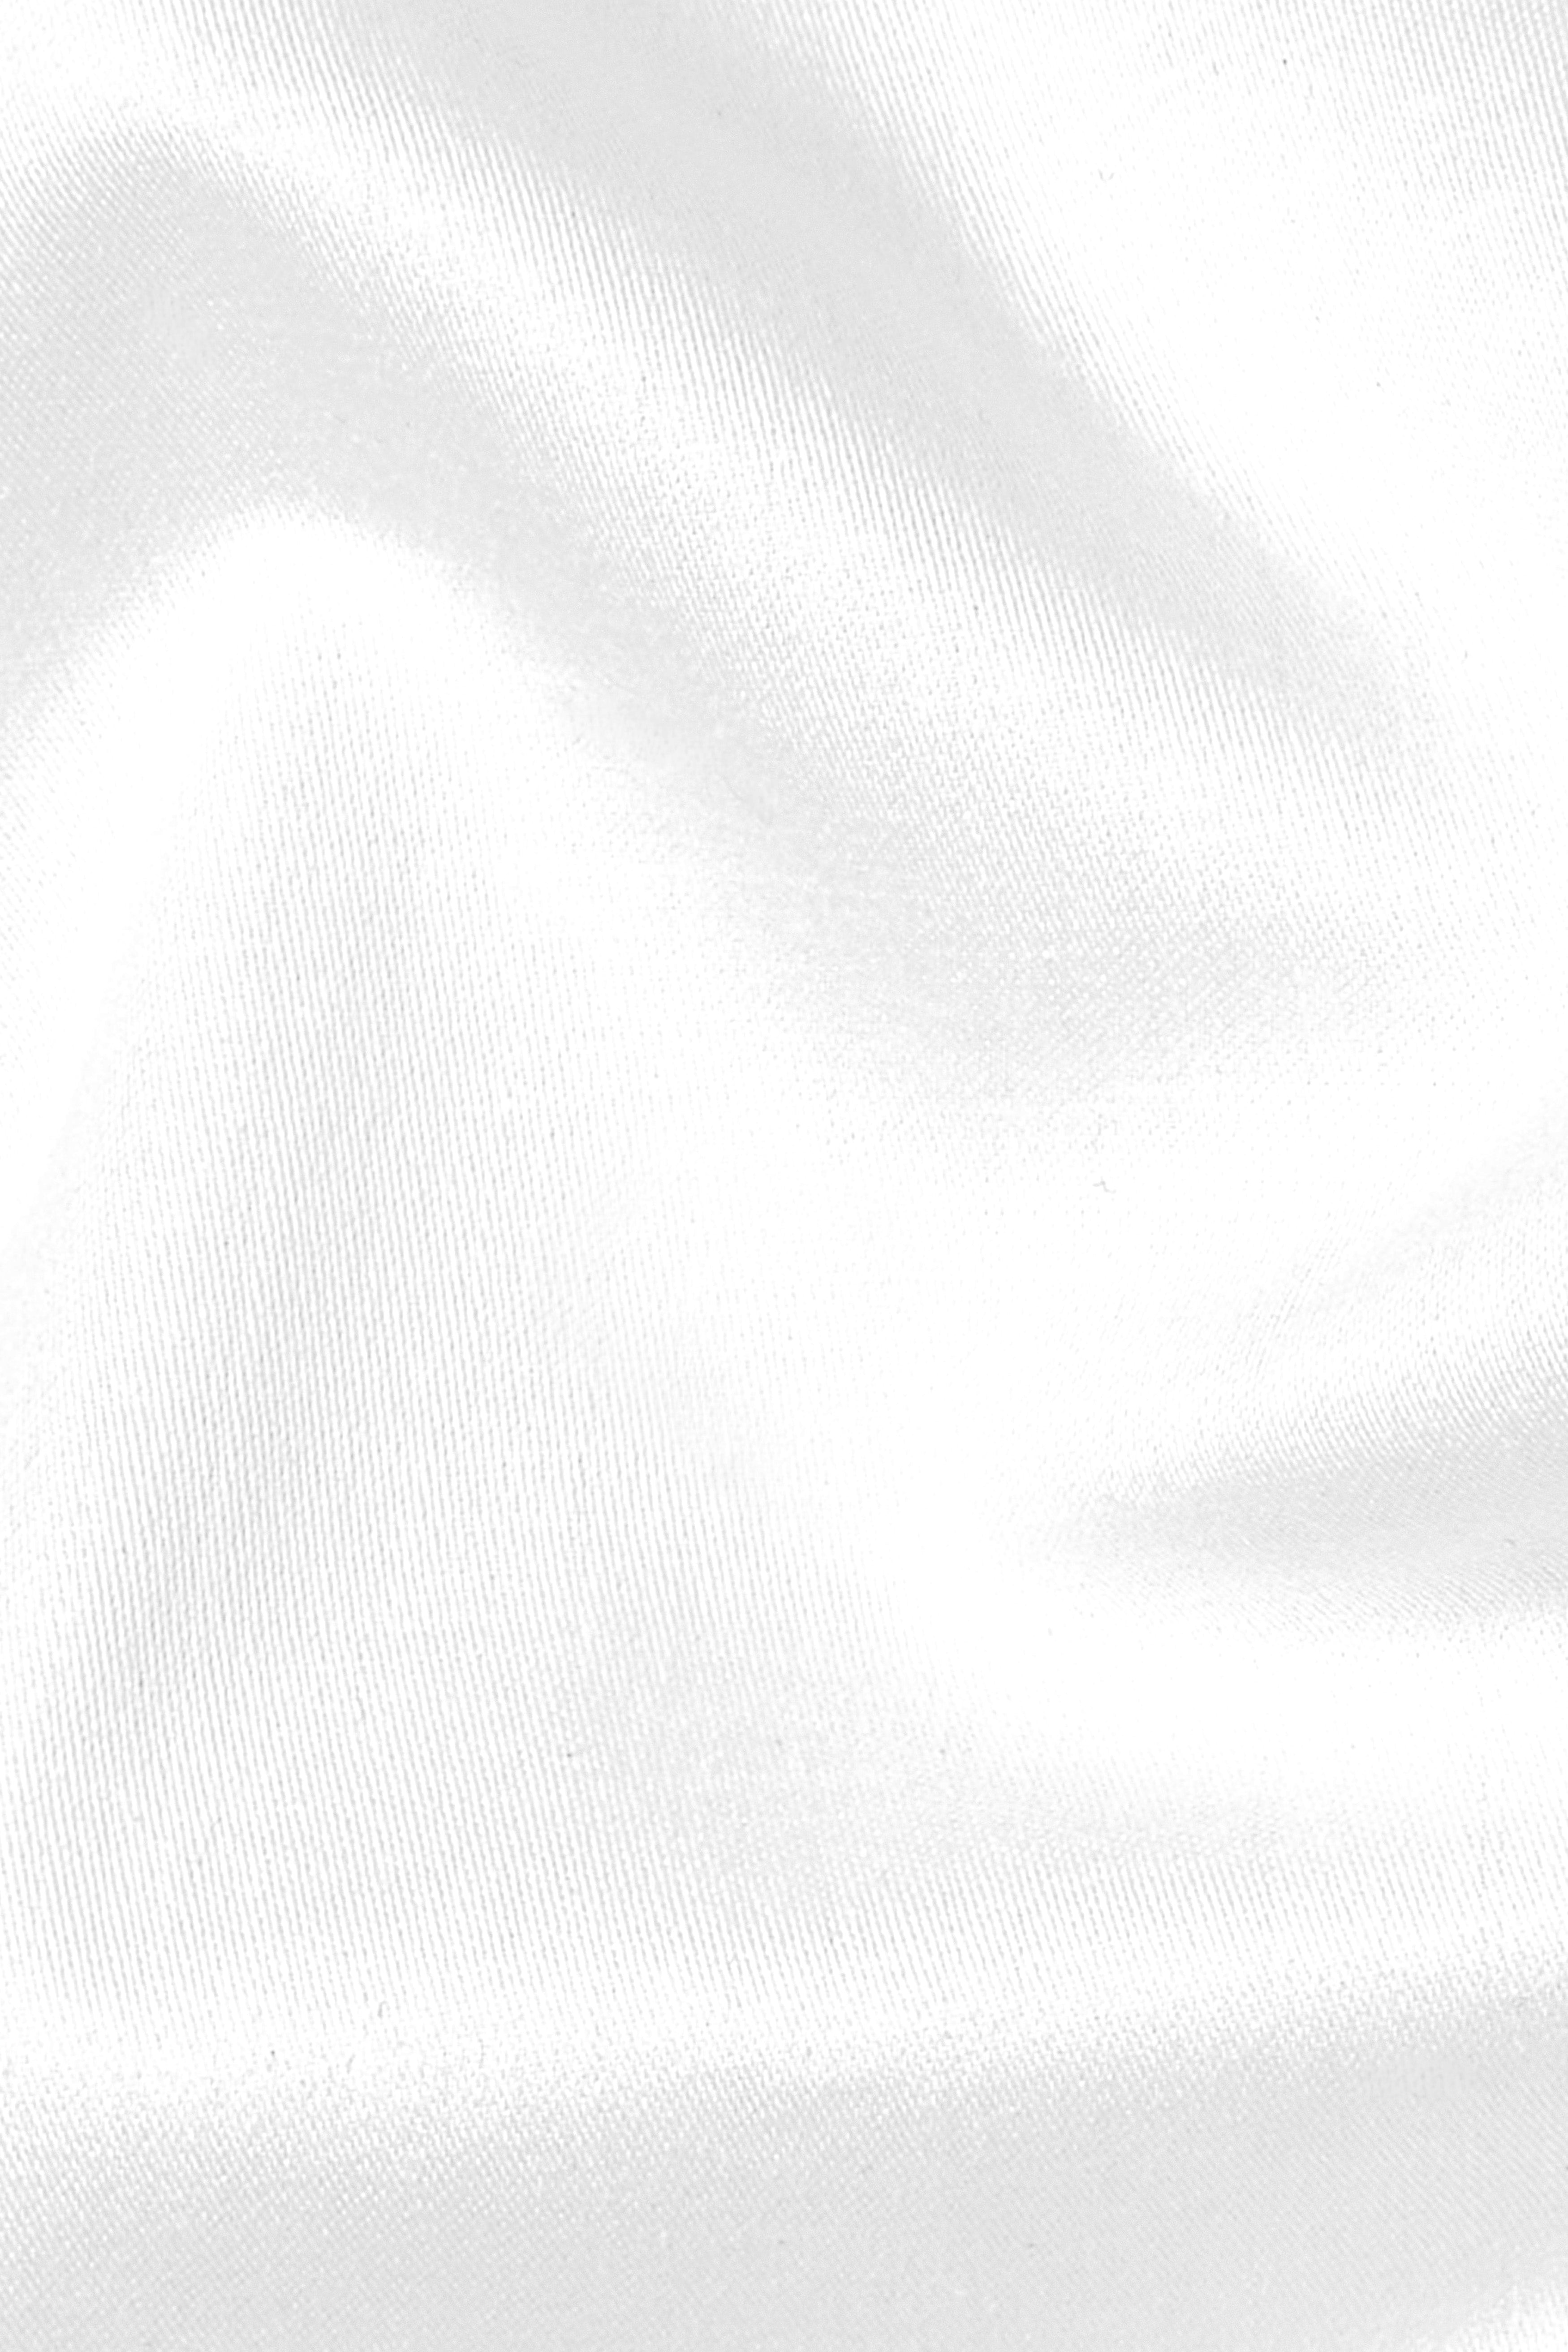 Bright White Subtle Sheen Rice Stitching Patterned Indian Kurta Style Super Soft Giza Cotton SHIRT